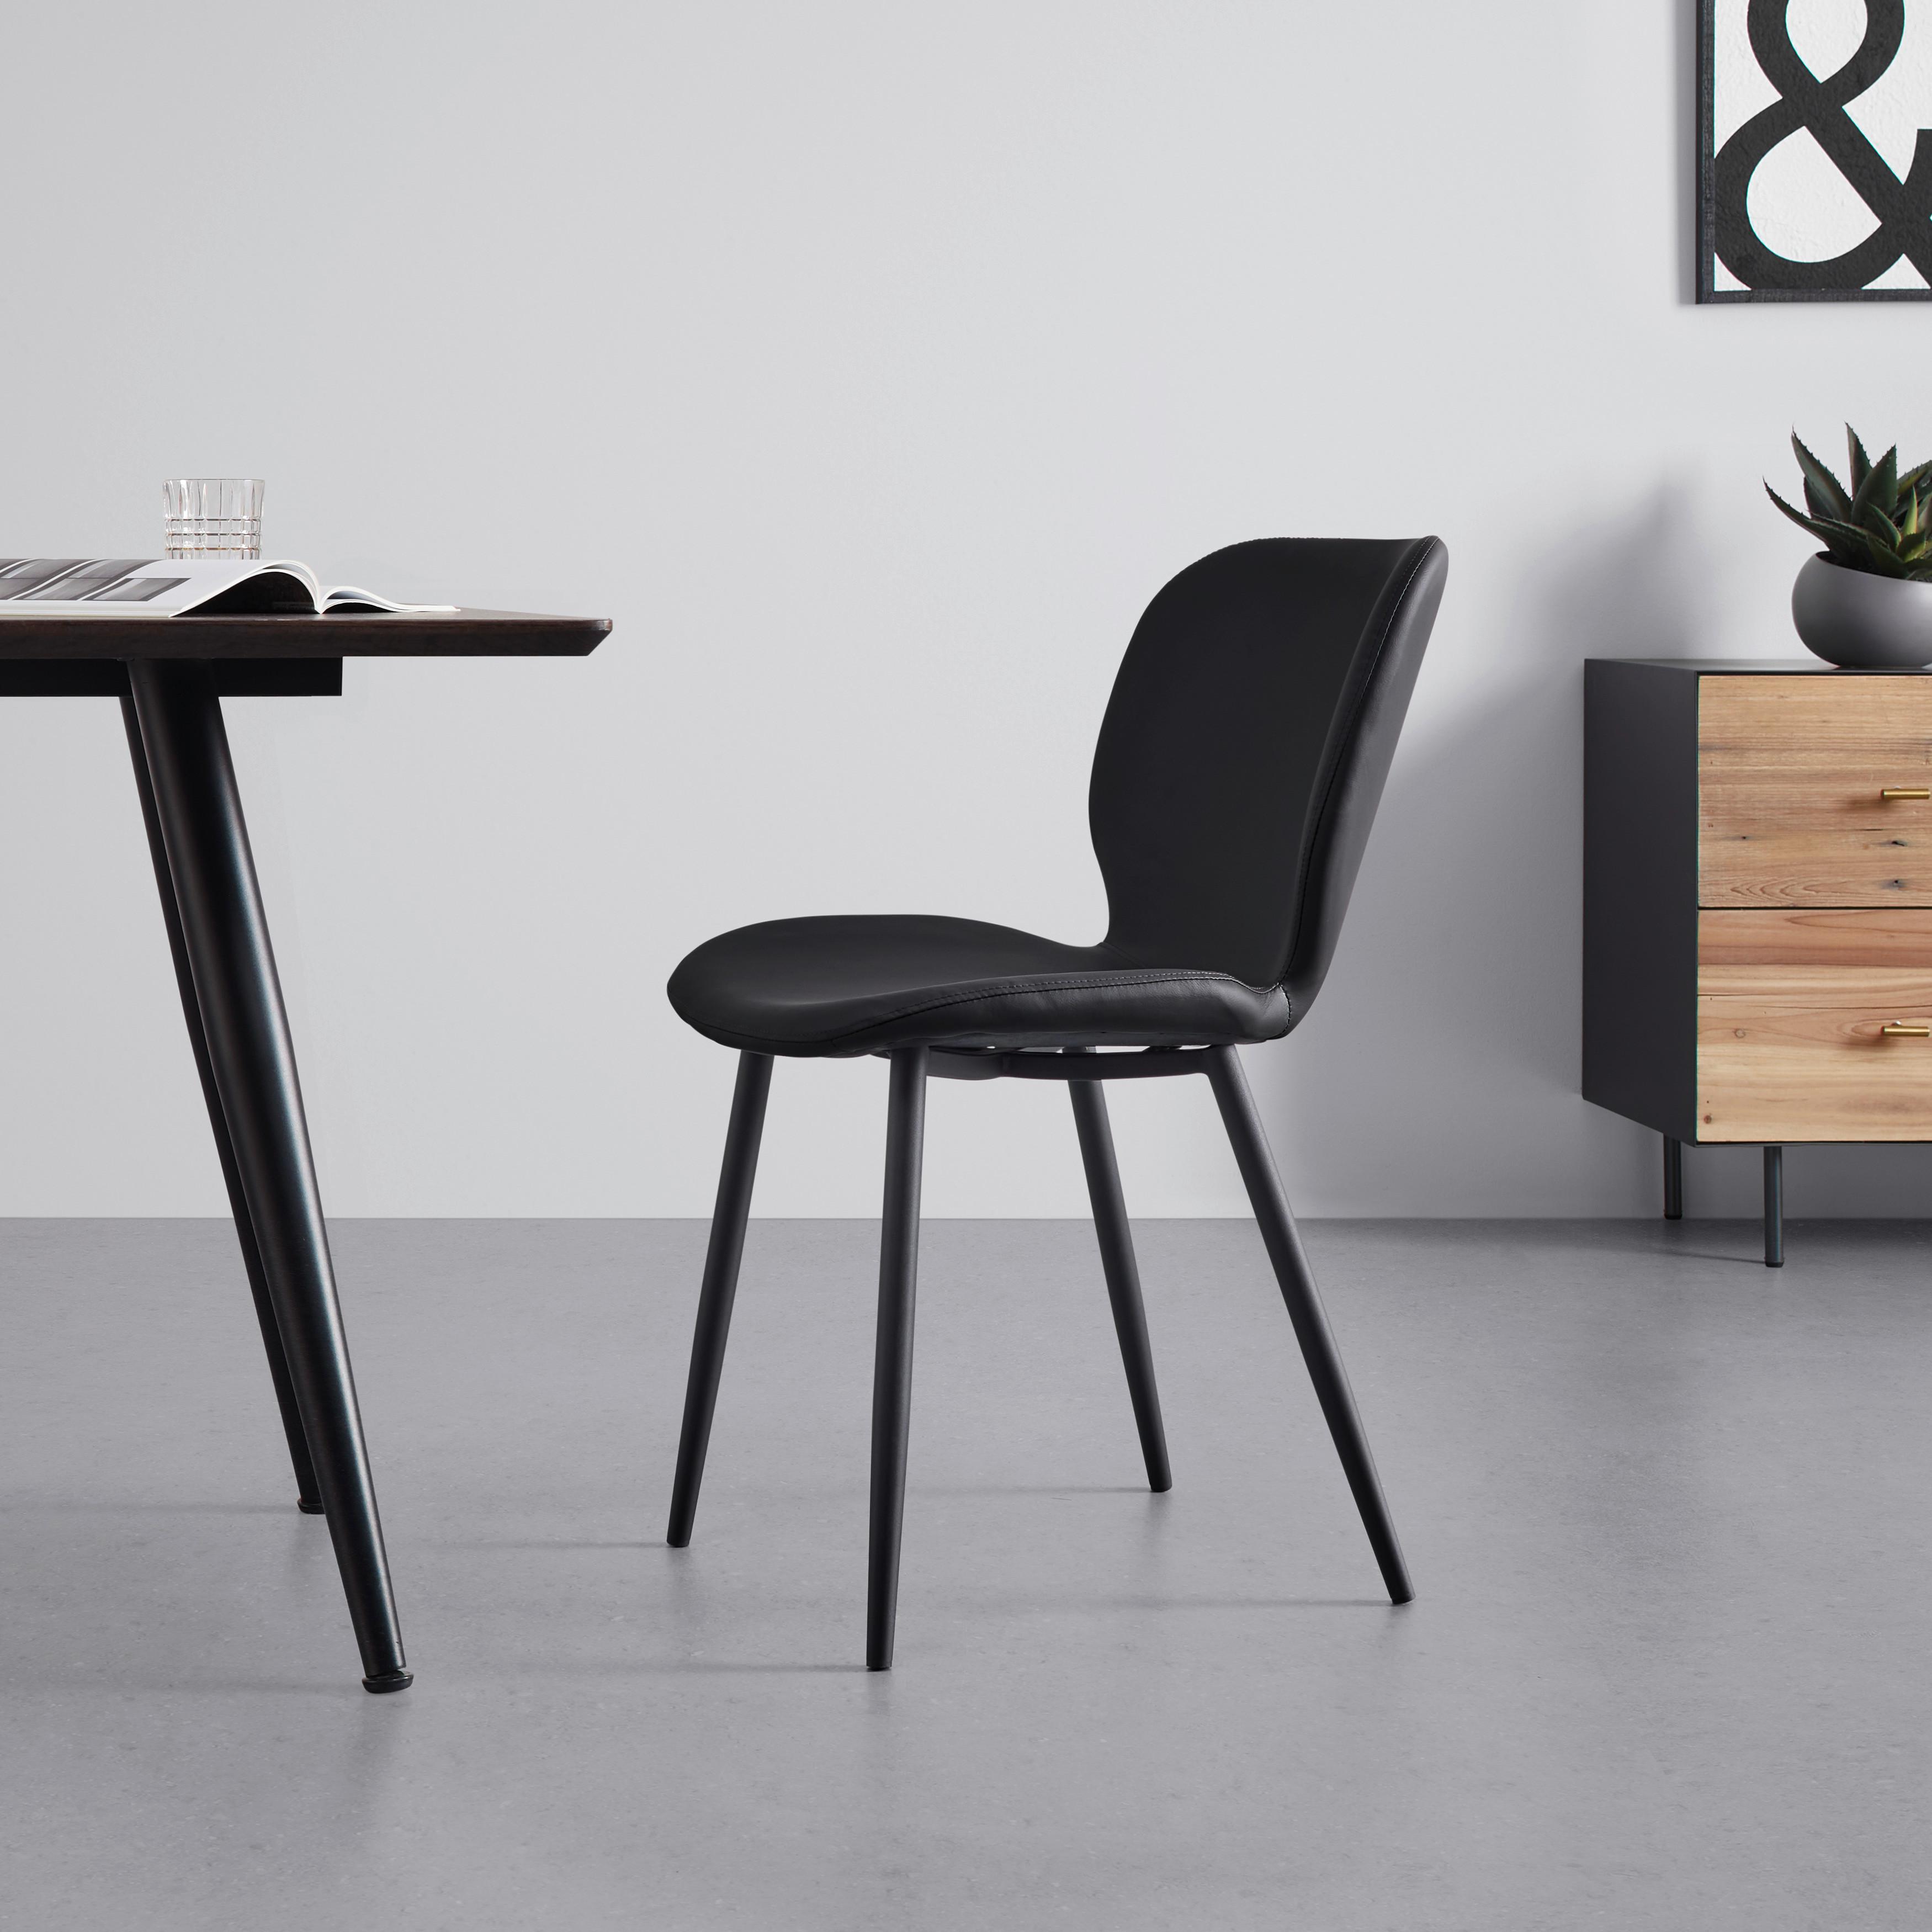 Židle Iery - Černá Koženka - černá, Moderní, kov/dřevo (46/83/54cm) - Bessagi Home